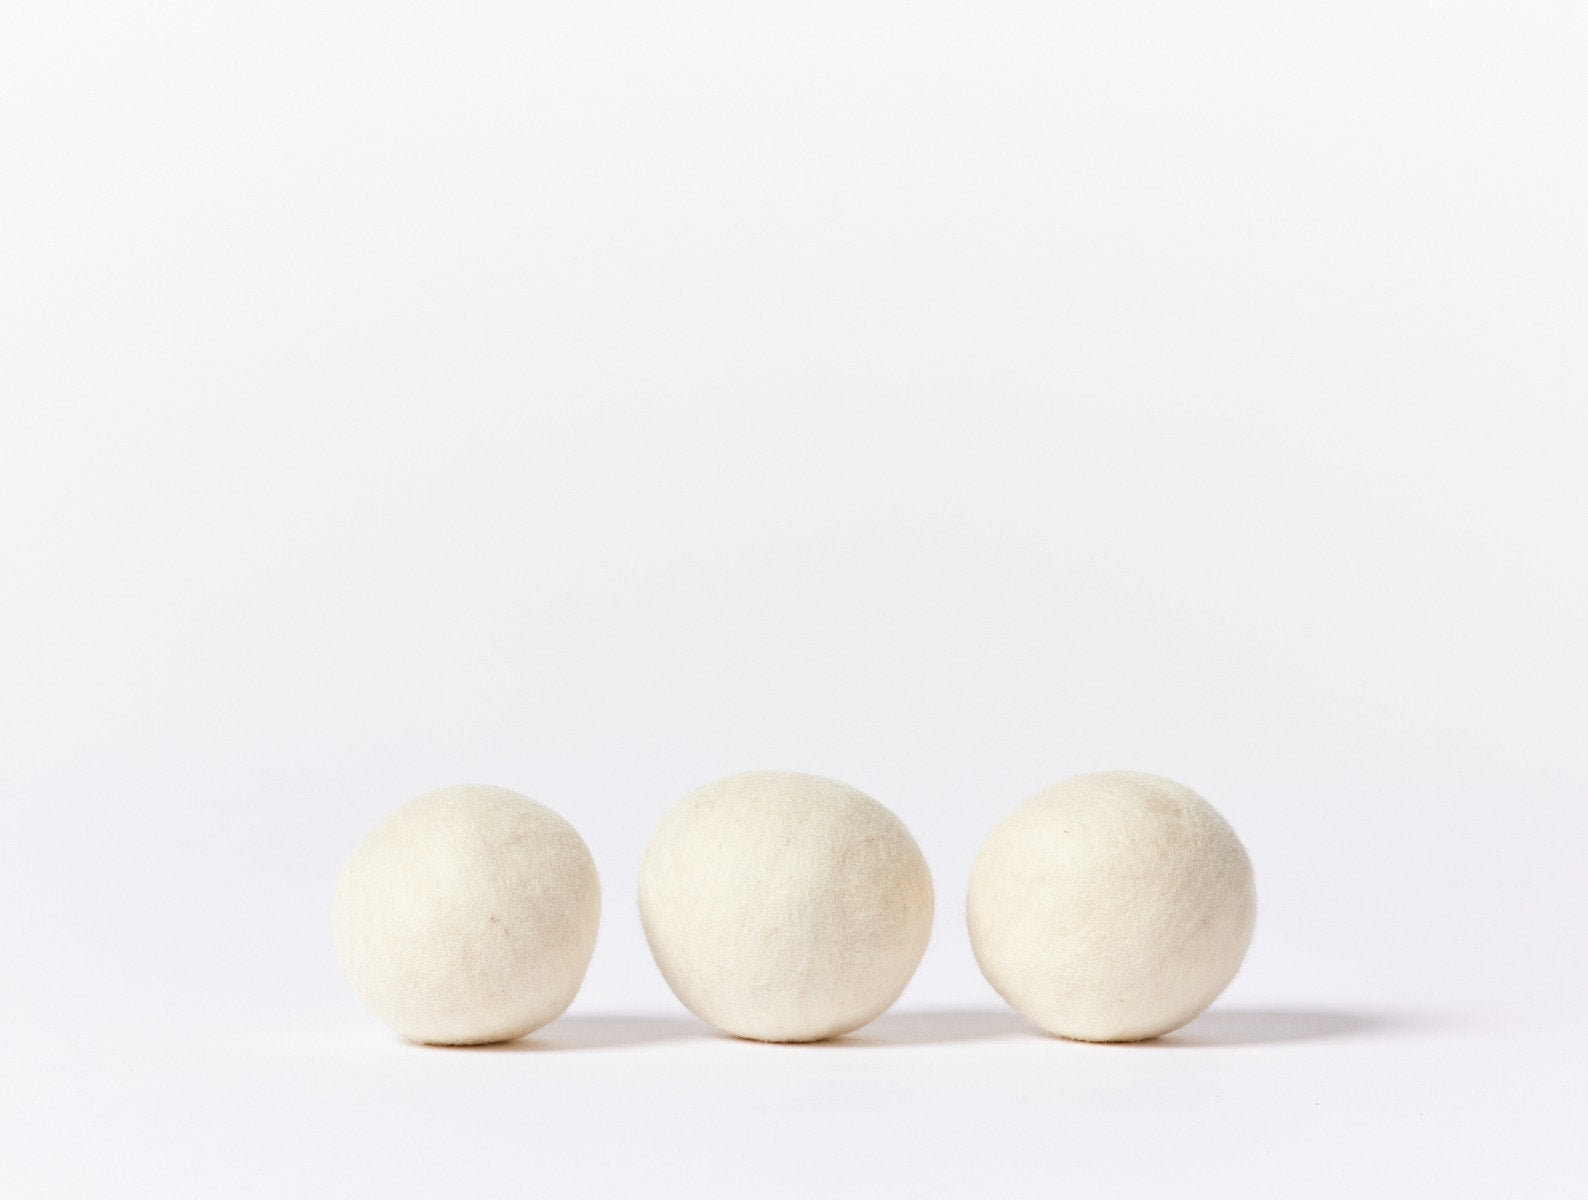 Wool Dryer Balls: Set of 4